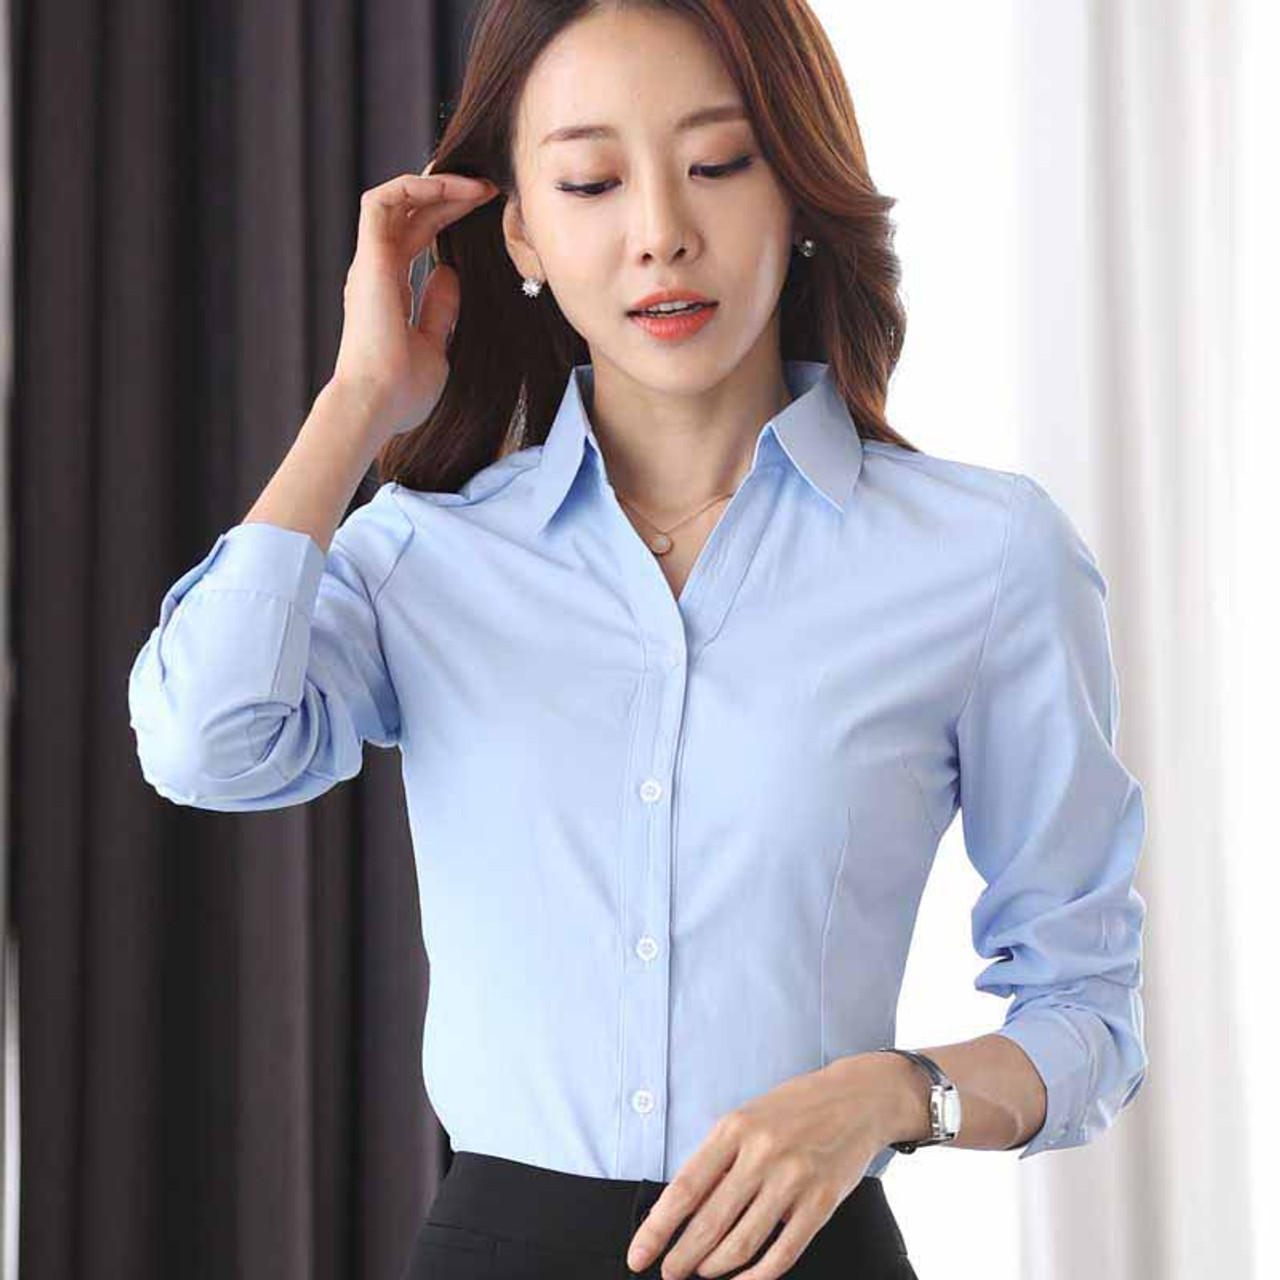 Blue plain long sleeve button shirt | Womens shirts clothing online ...